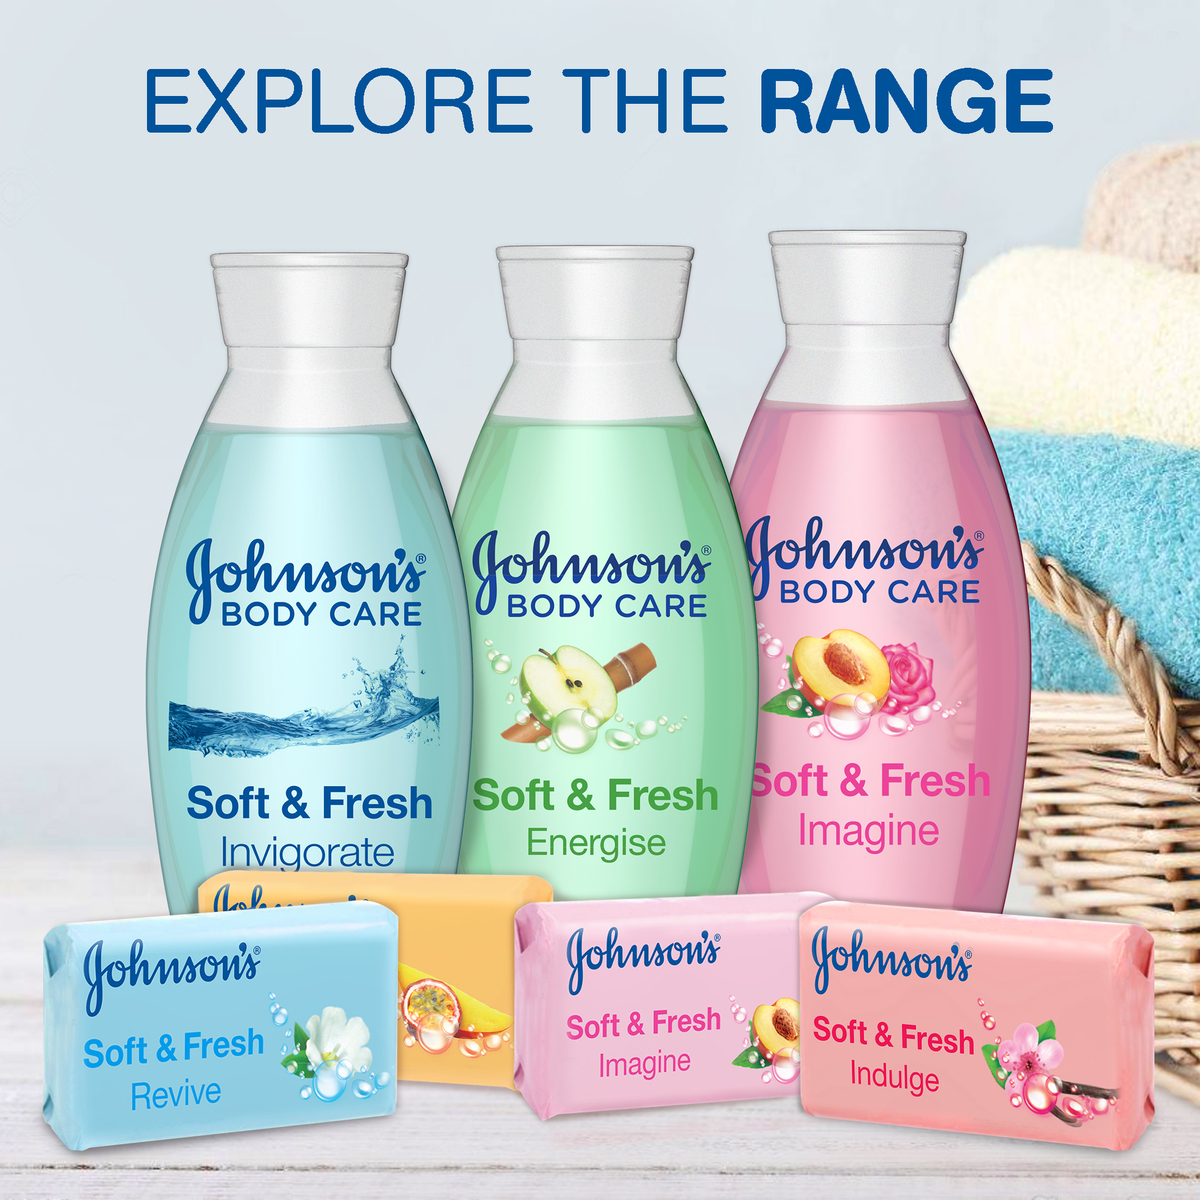 Johnson's Bath Soap Soft & Fresh Indulge 6 x 125g